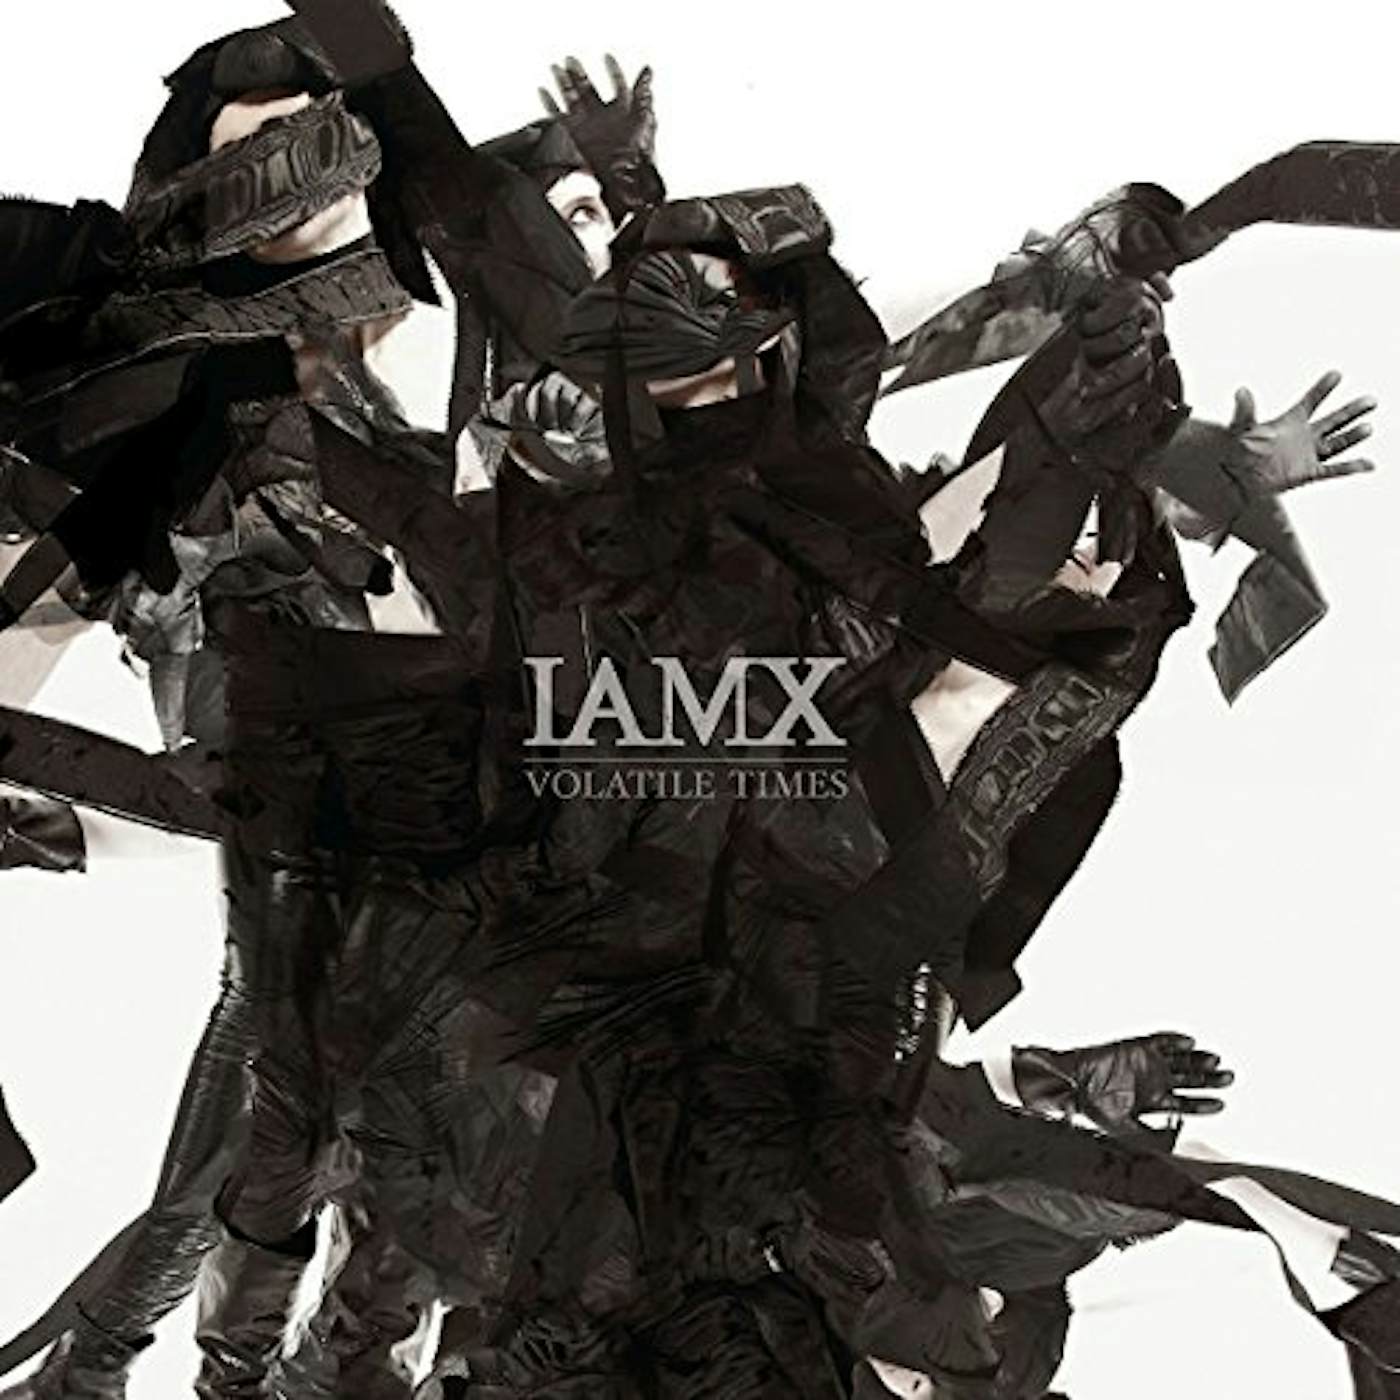 IAMX VOLATILE TIMES CD